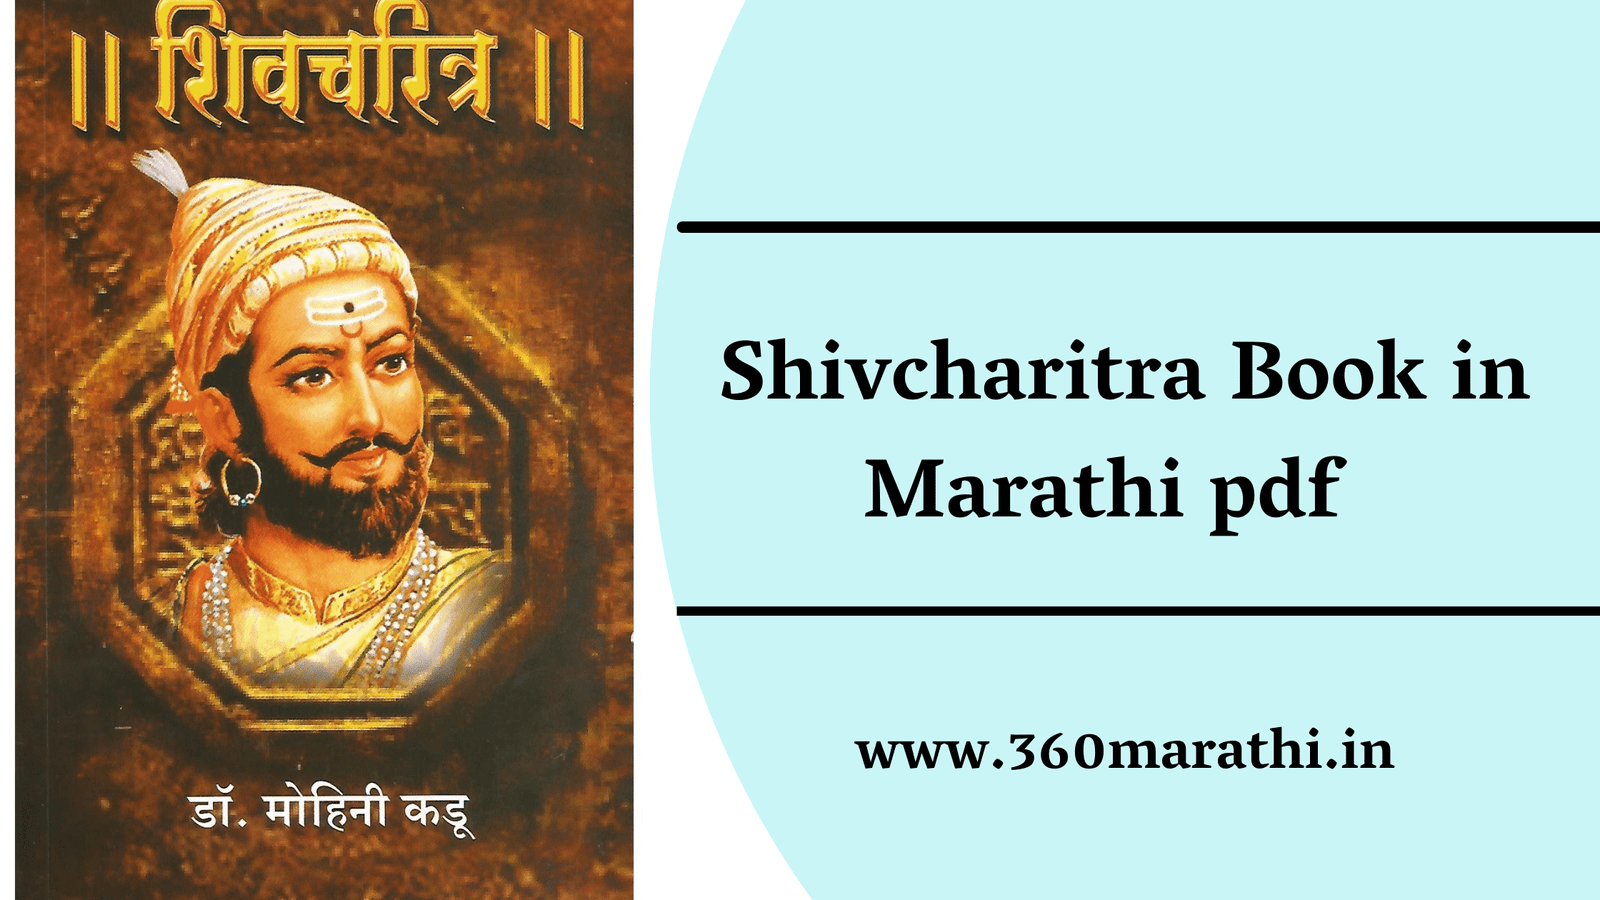 Shivcharitra Book in Marathi pdf | Shivaji Maharaj Charitra in Marathi PDF